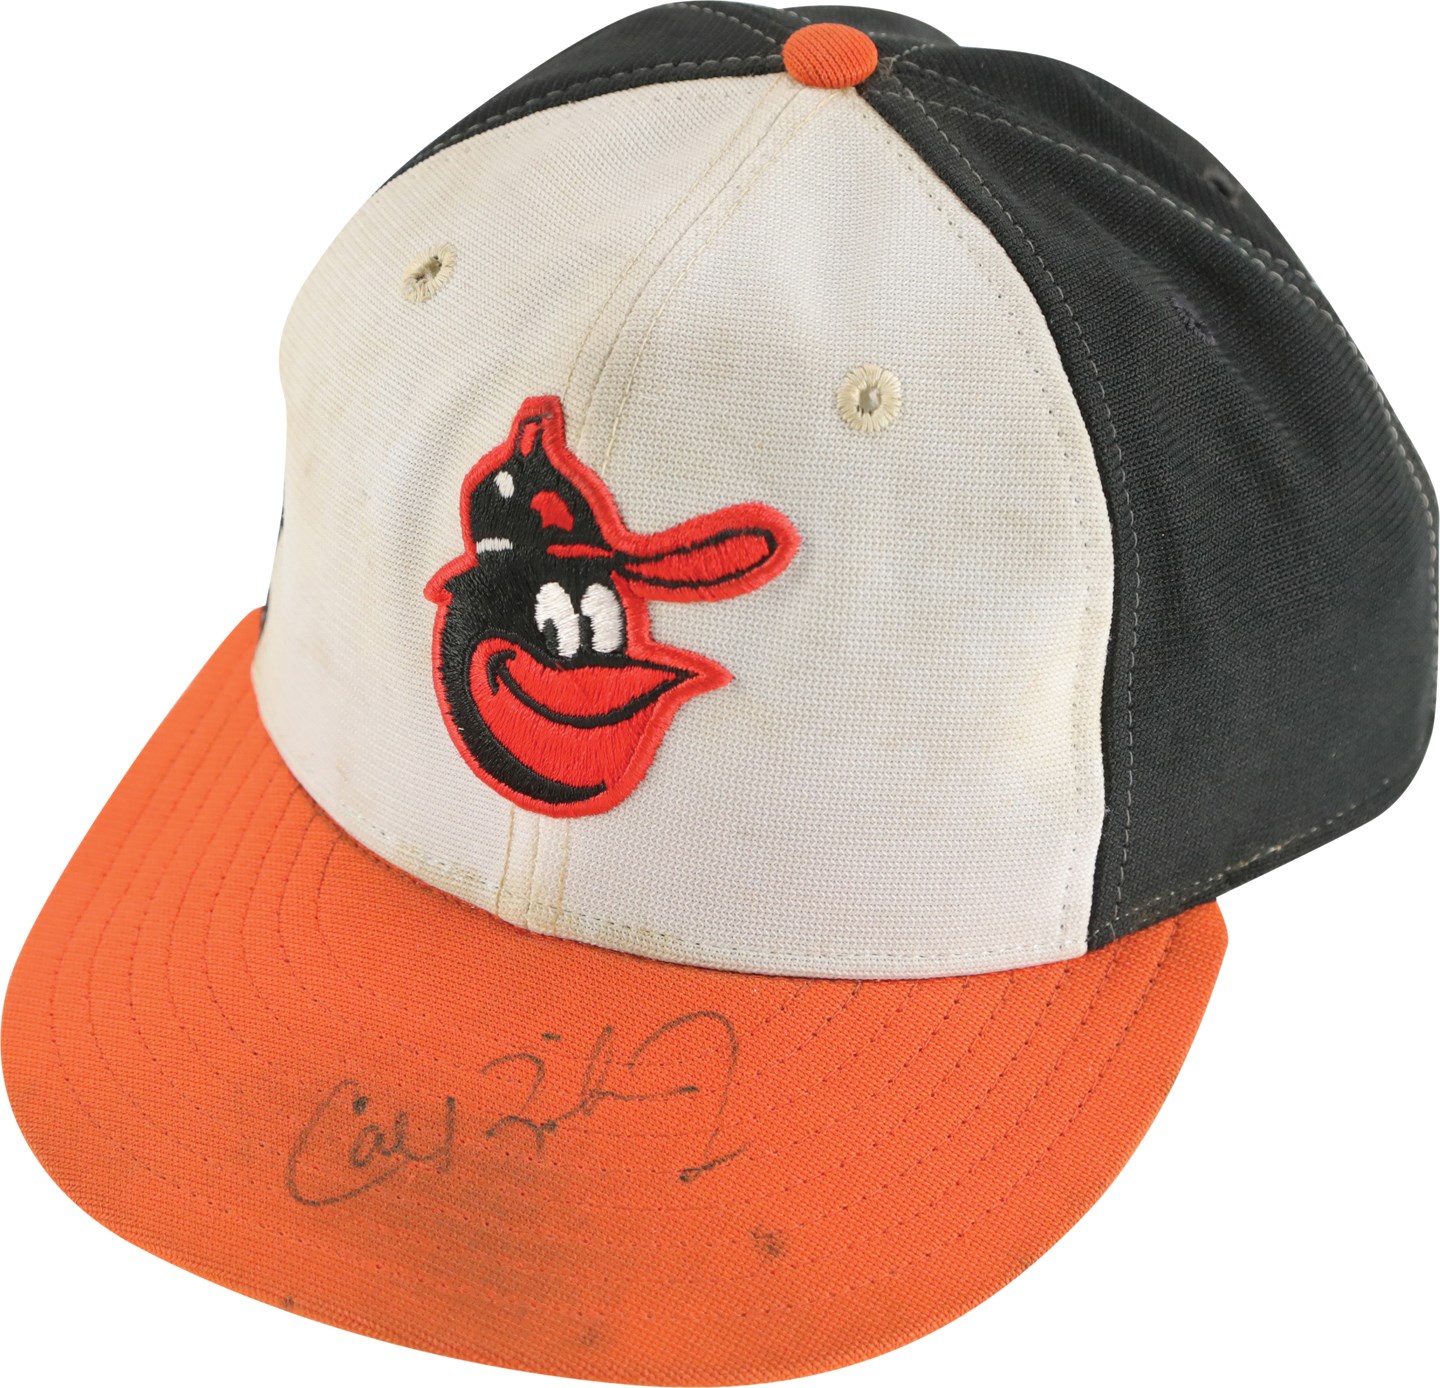 Baseball Equipment - Rookie Era Cal Ripken Jr. Baltimore Orioles Signed Game Used Hat (PSA)